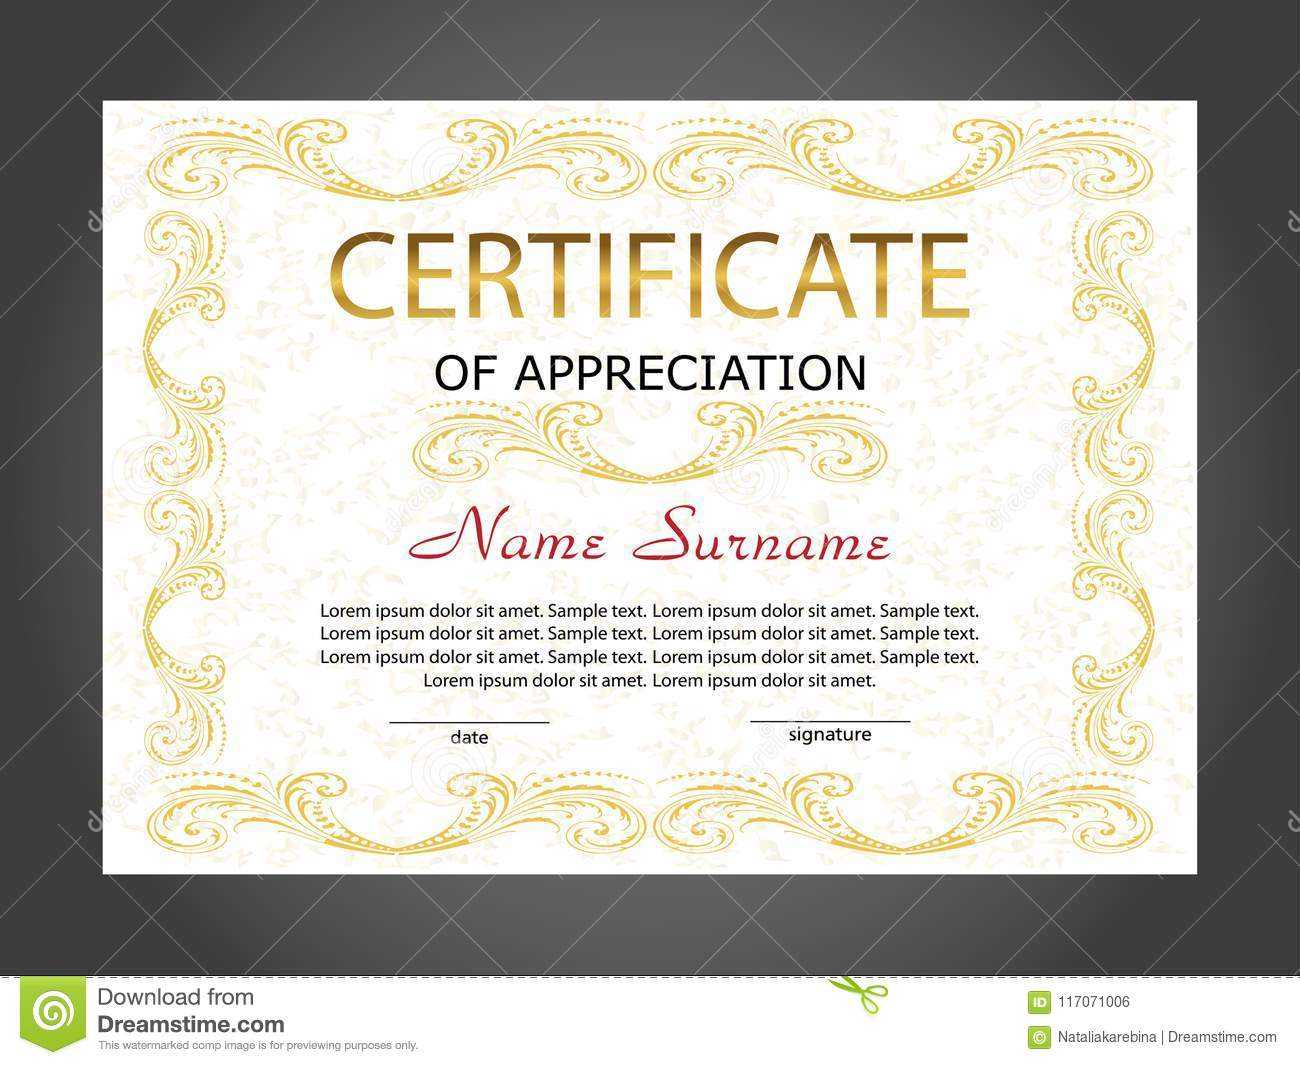 Certificate Of Appreciation, Diploma Template. Reward. Award With Winner Certificate Template